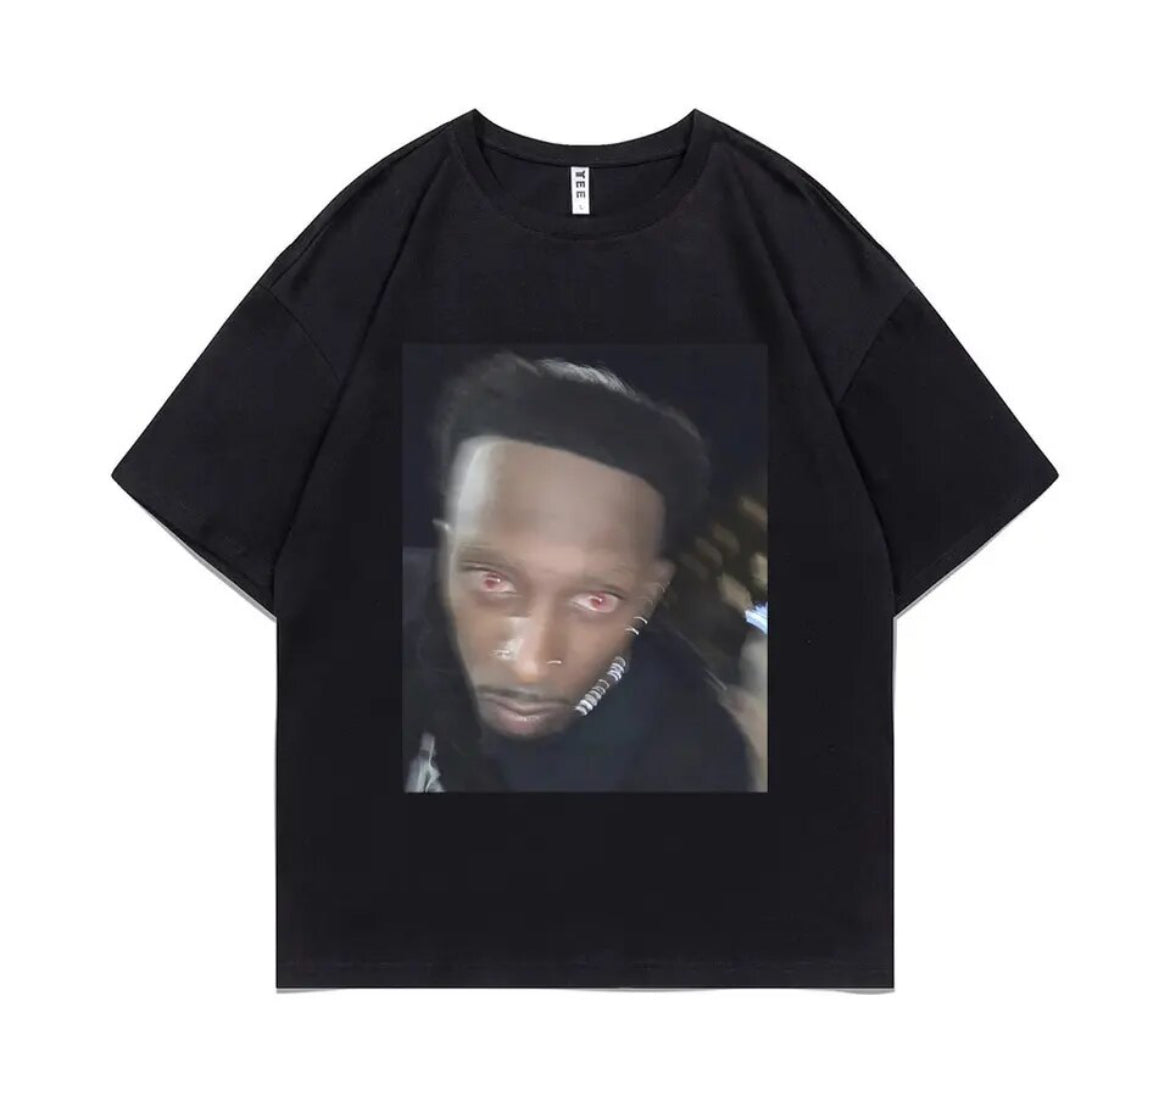 Carti Ass Face T-shirt